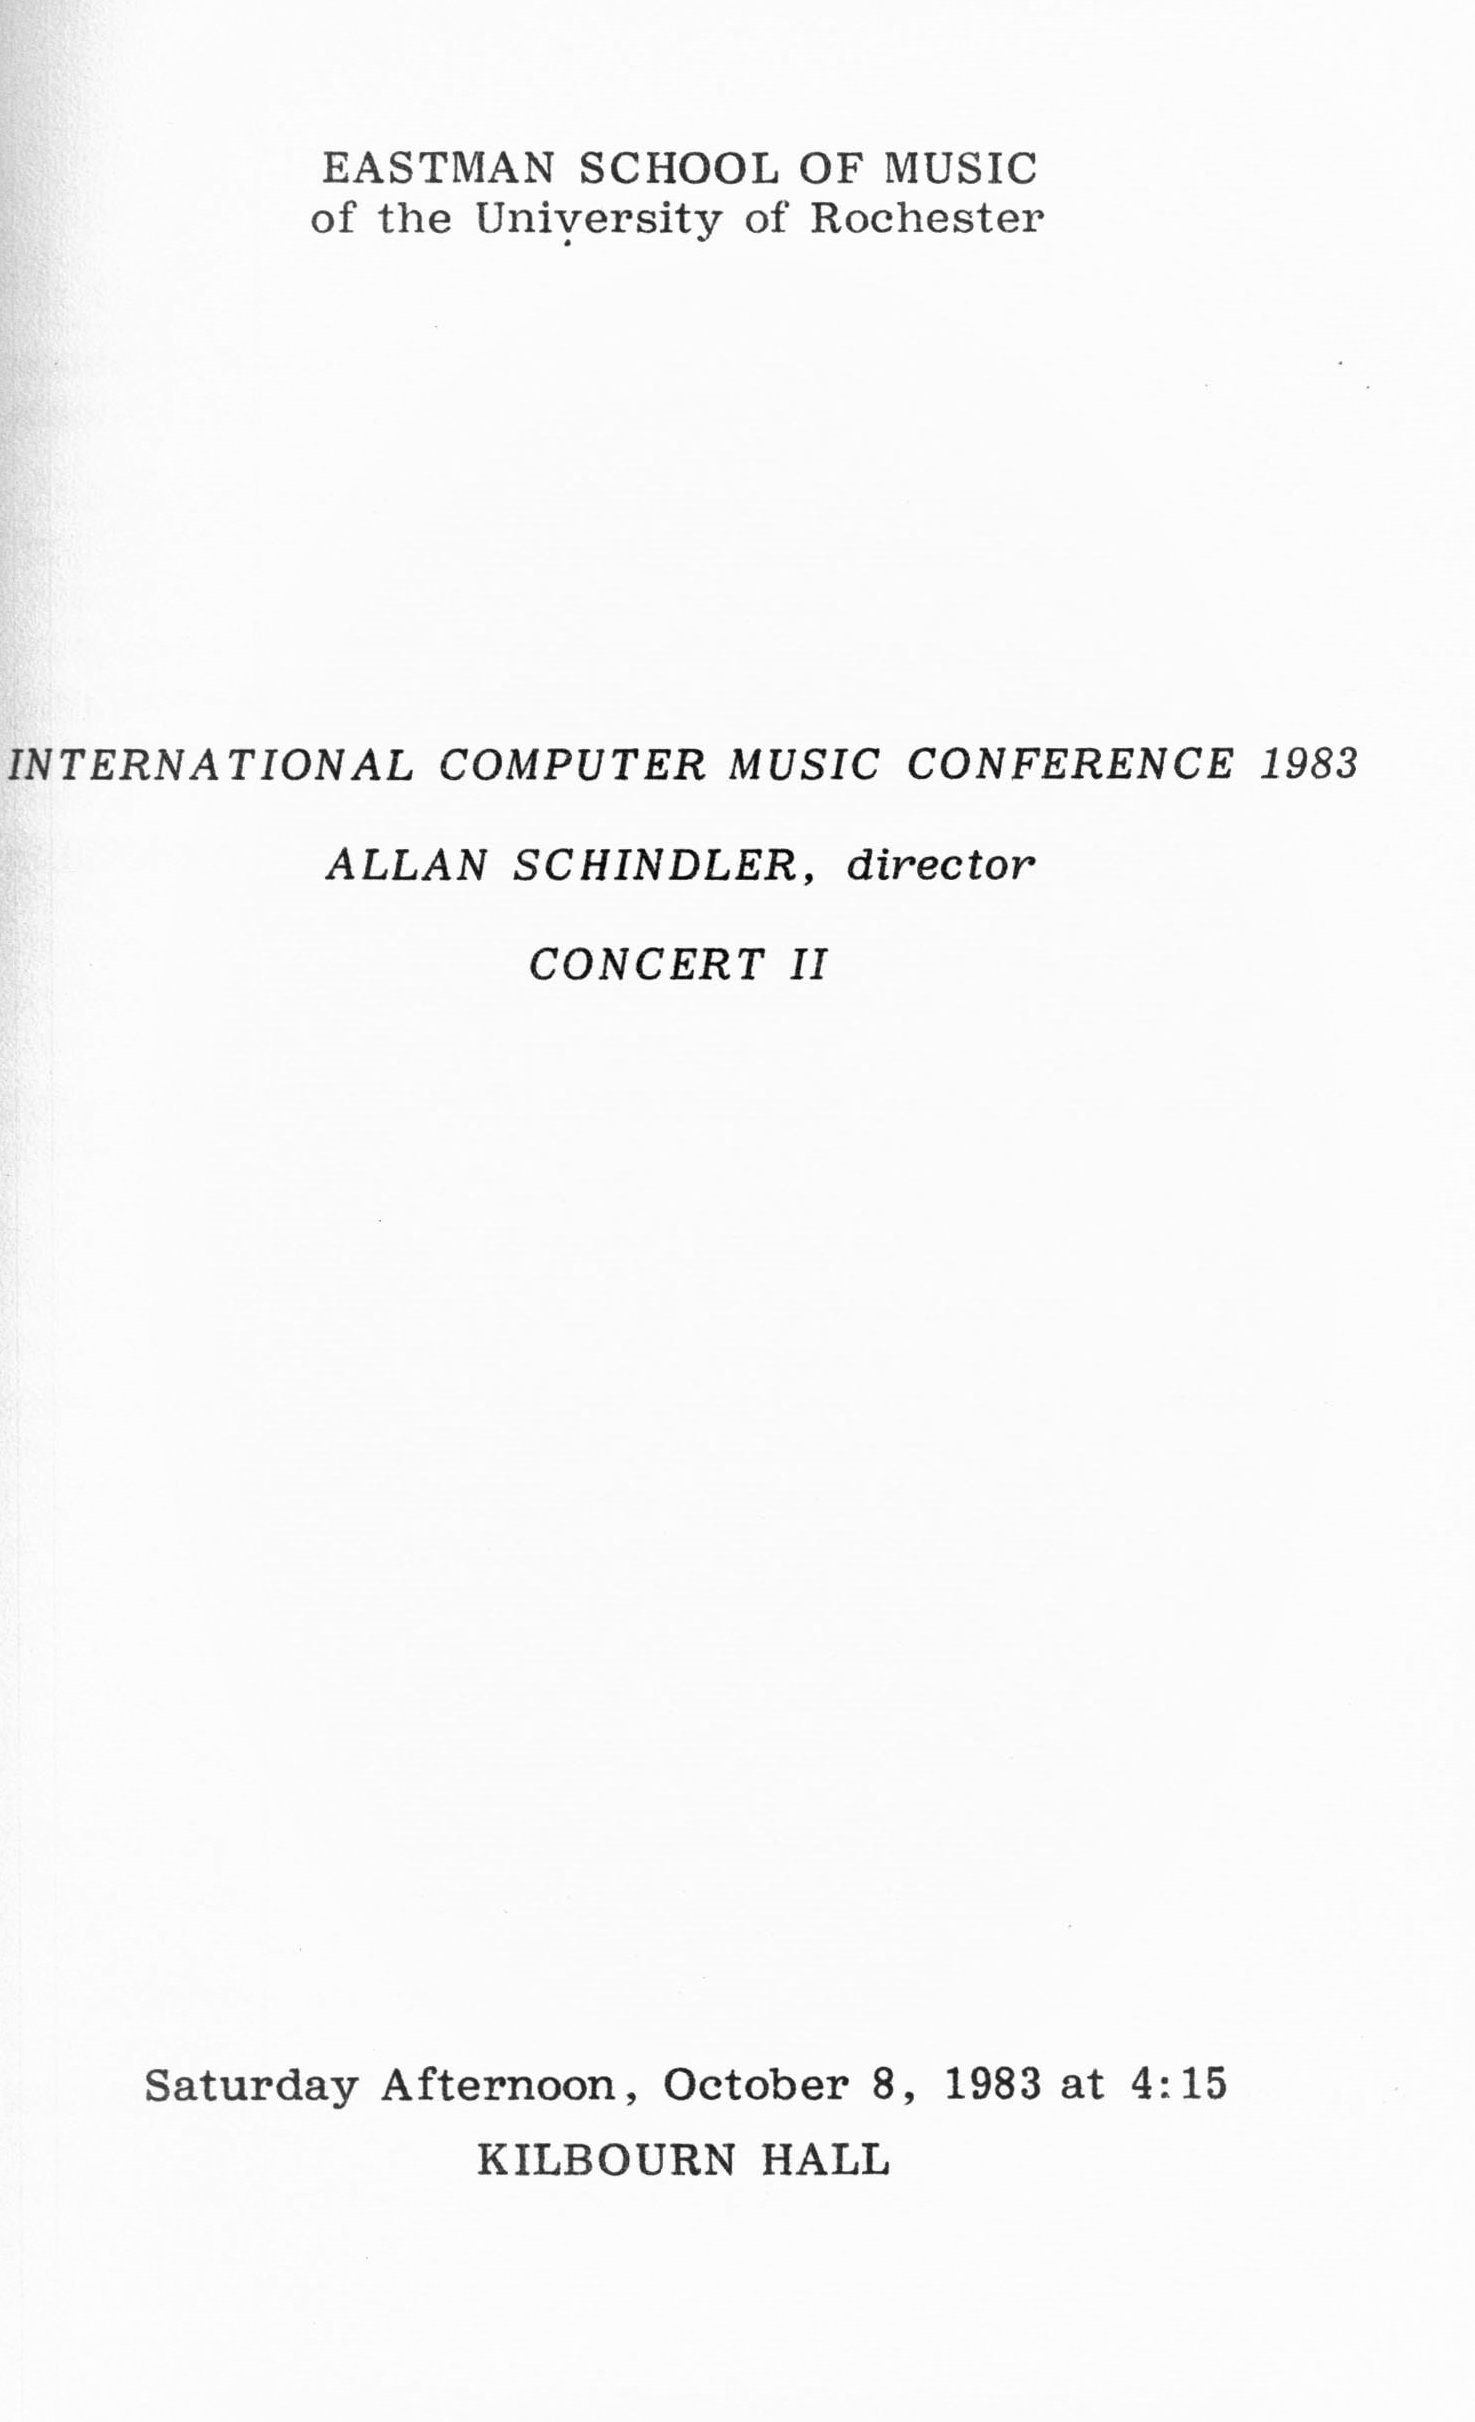 1983 ICMC Concert II program, page 01